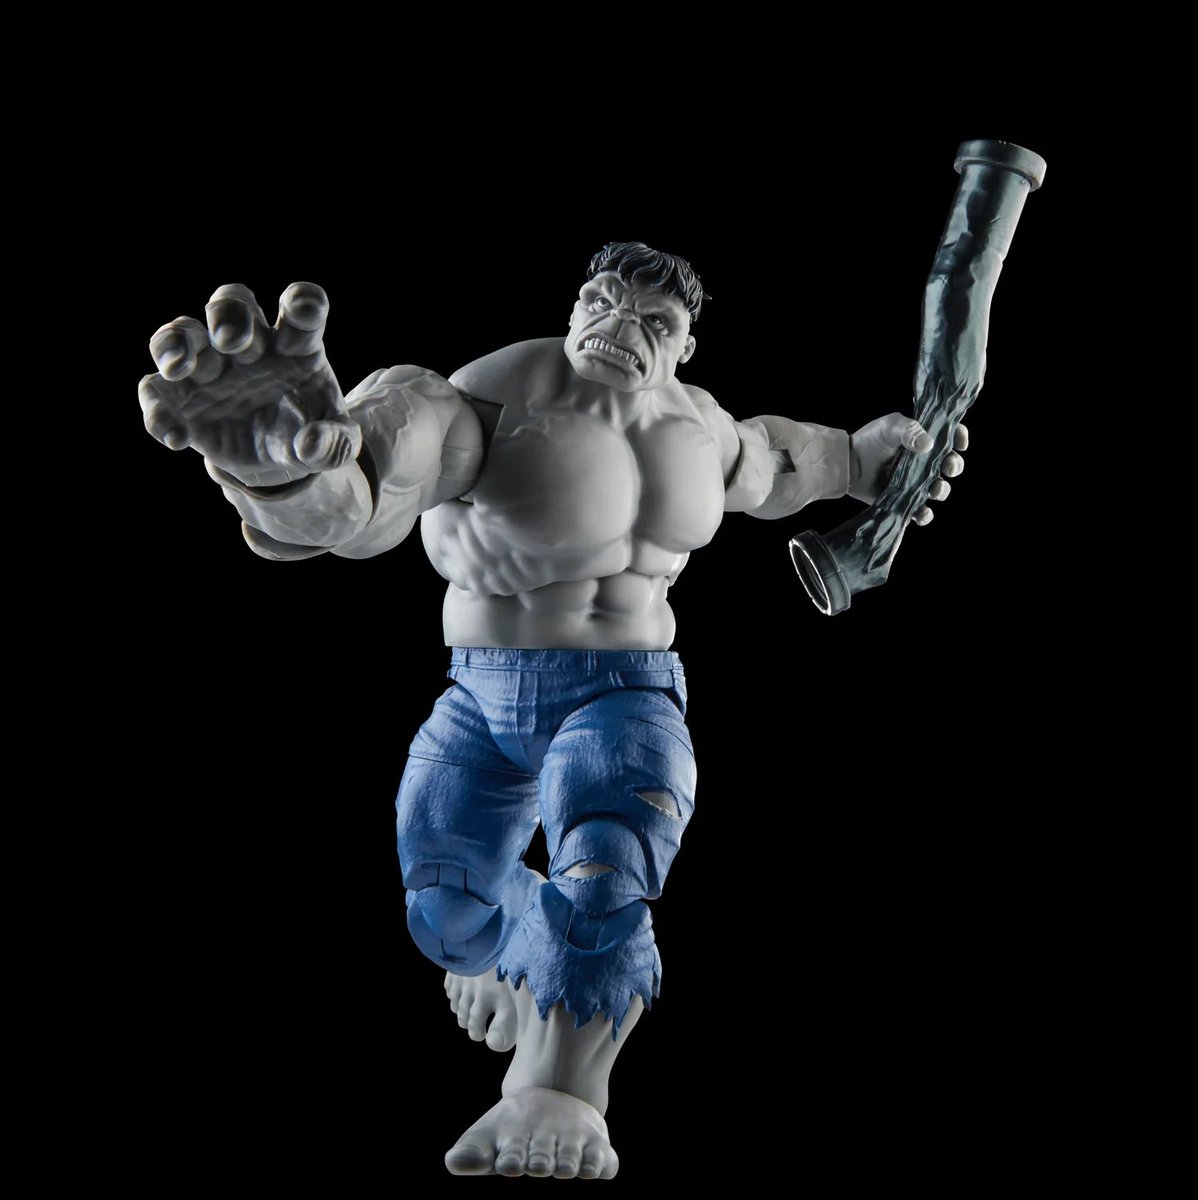 Gray Hulk!

ee.toys/VGJFUL

#Marvel #MarvelComics #MarvelLegends #GrayHulk